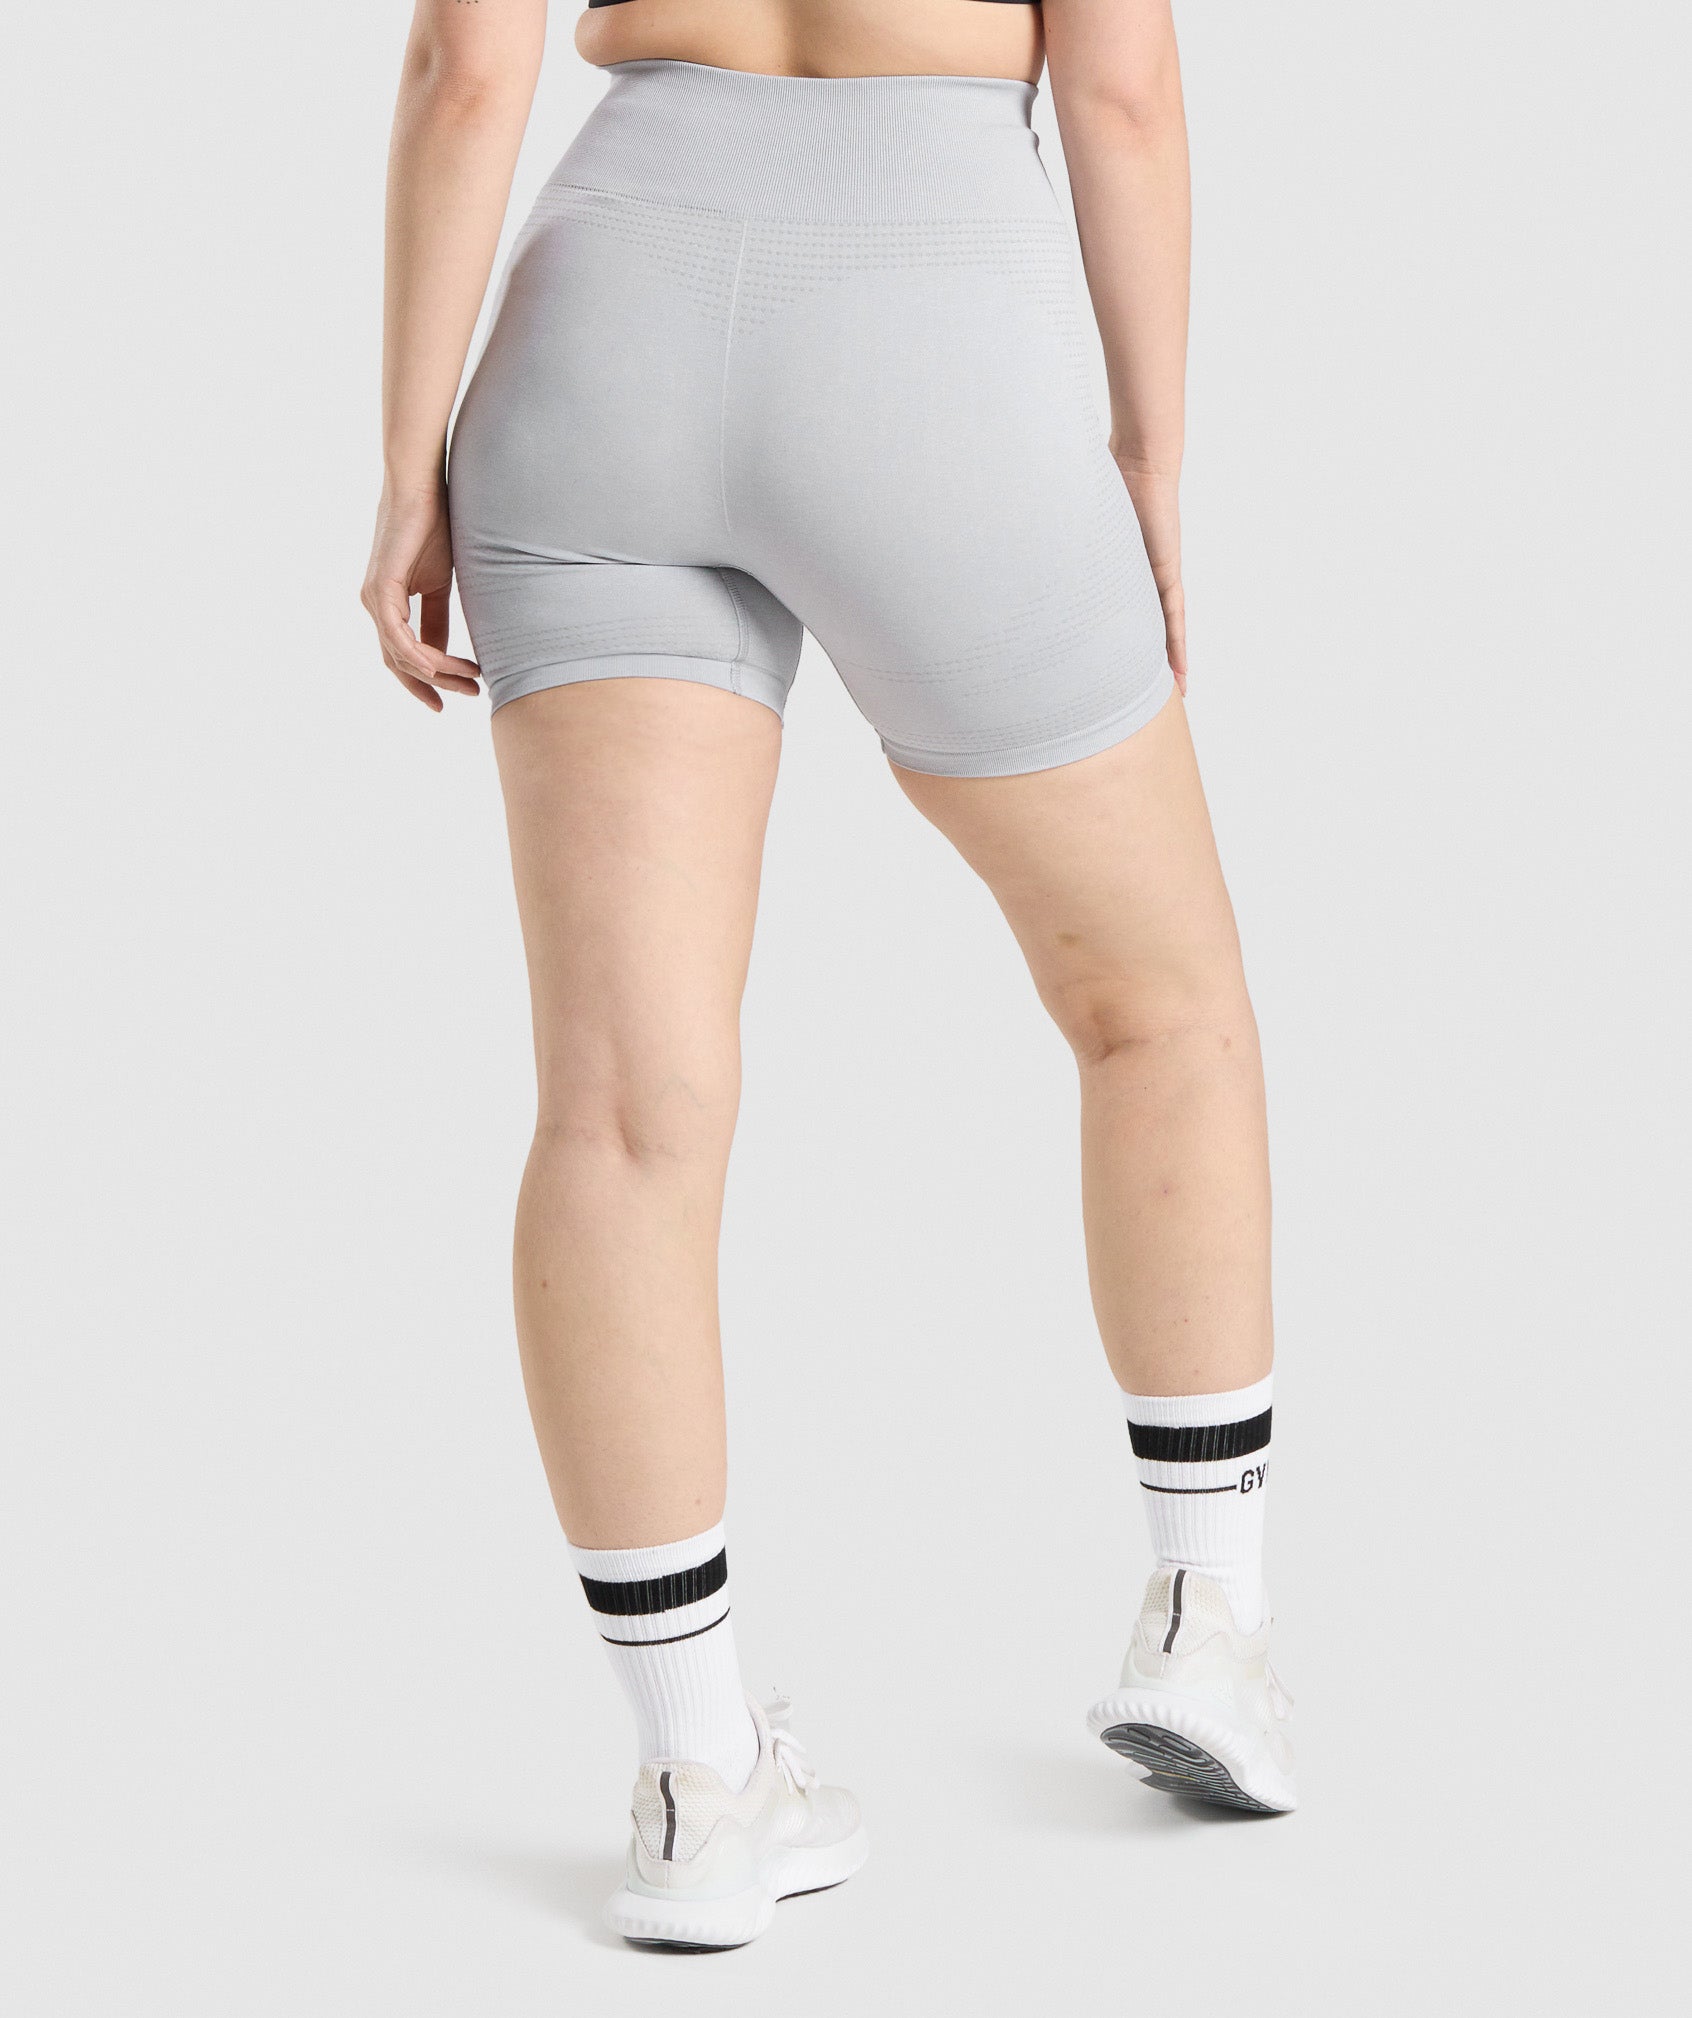 Gymshark Vital Seamless Shorts Gray - $23 (42% Off Retail) - From Kahlan